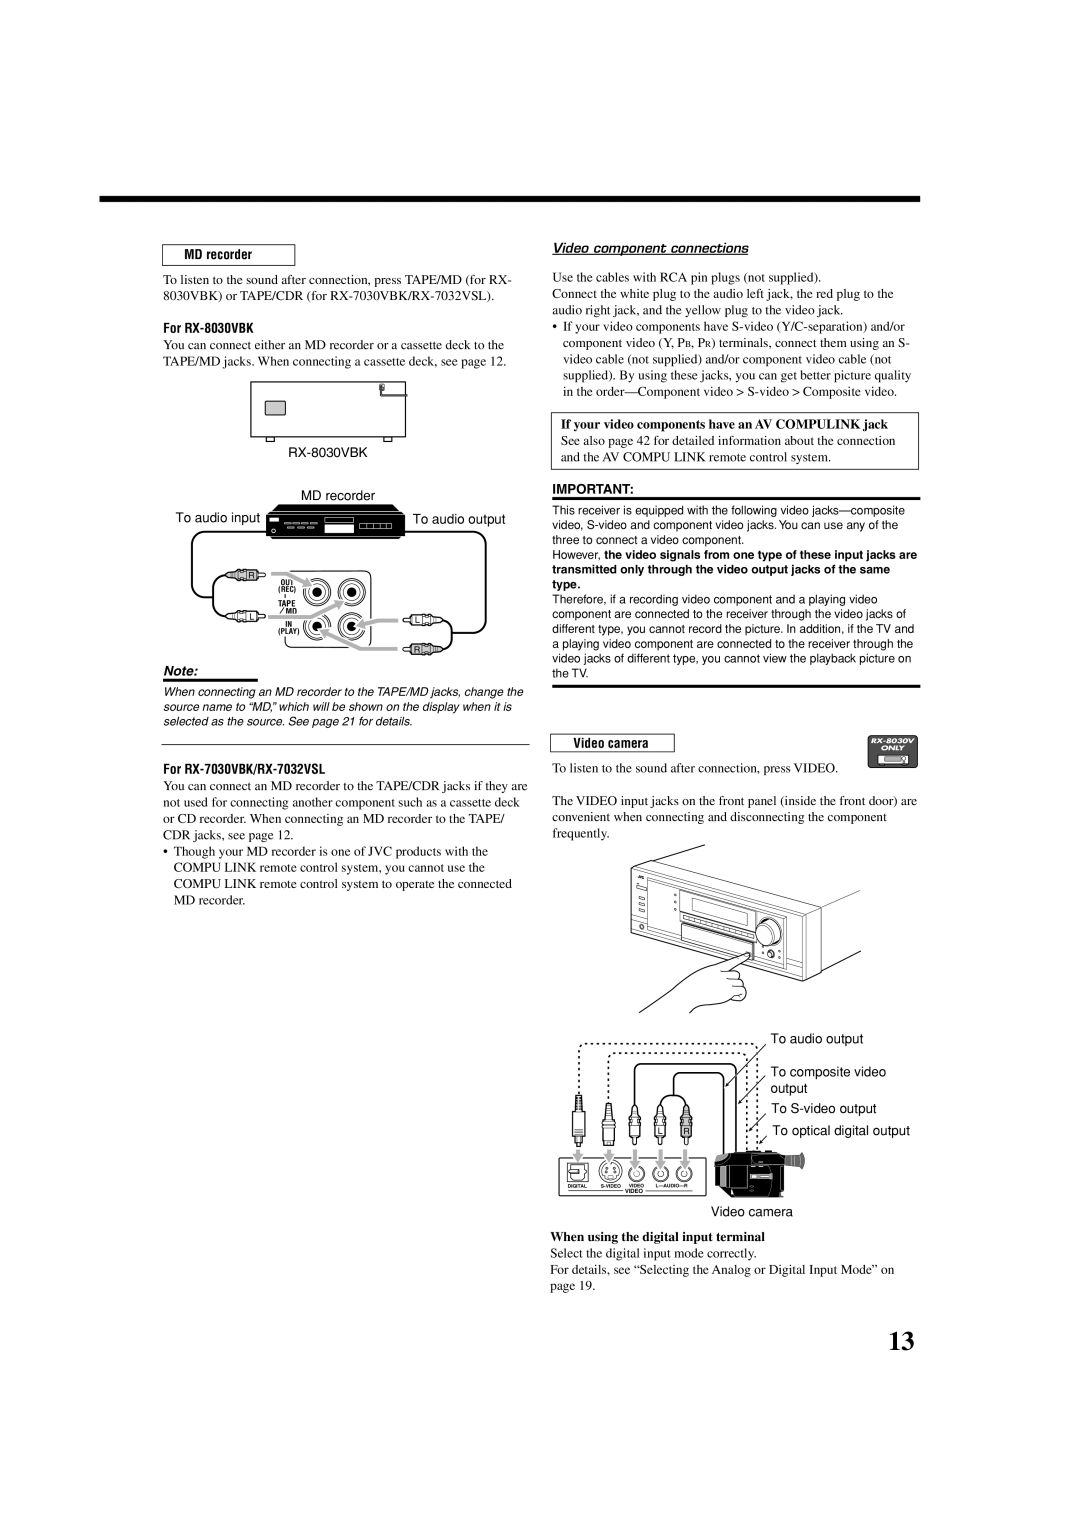 JVC RX7030VBK manual MD recorder, For RX-8030VBK, For RX-7030VBK/RX-7032VSL, Video component connections, Video camera 